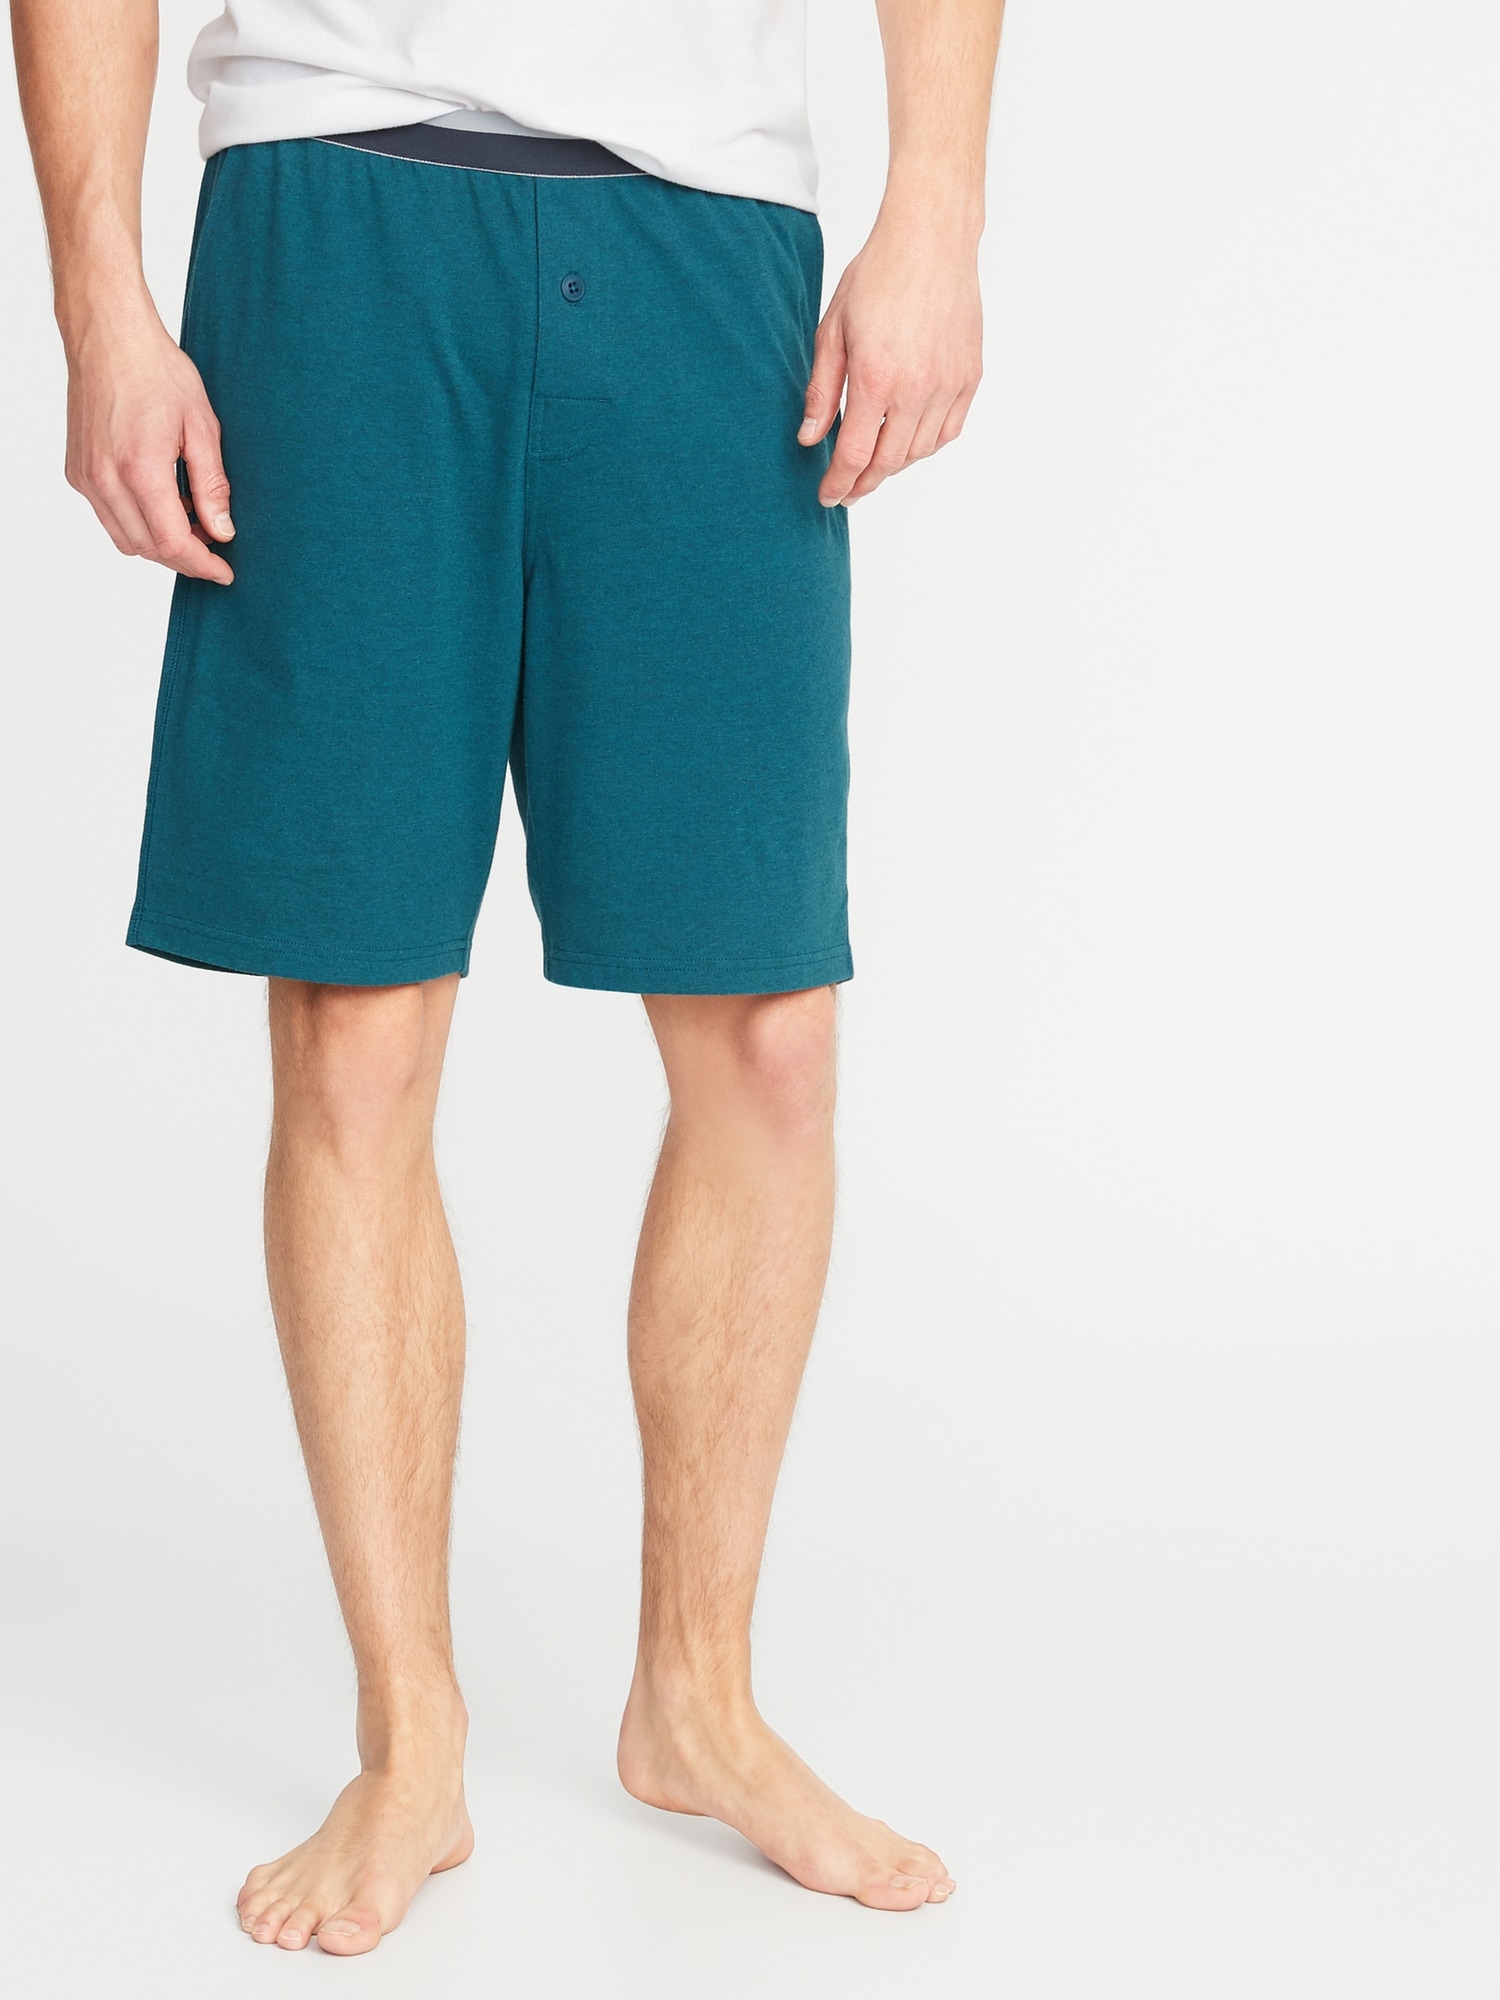 old navy men's pajama shorts